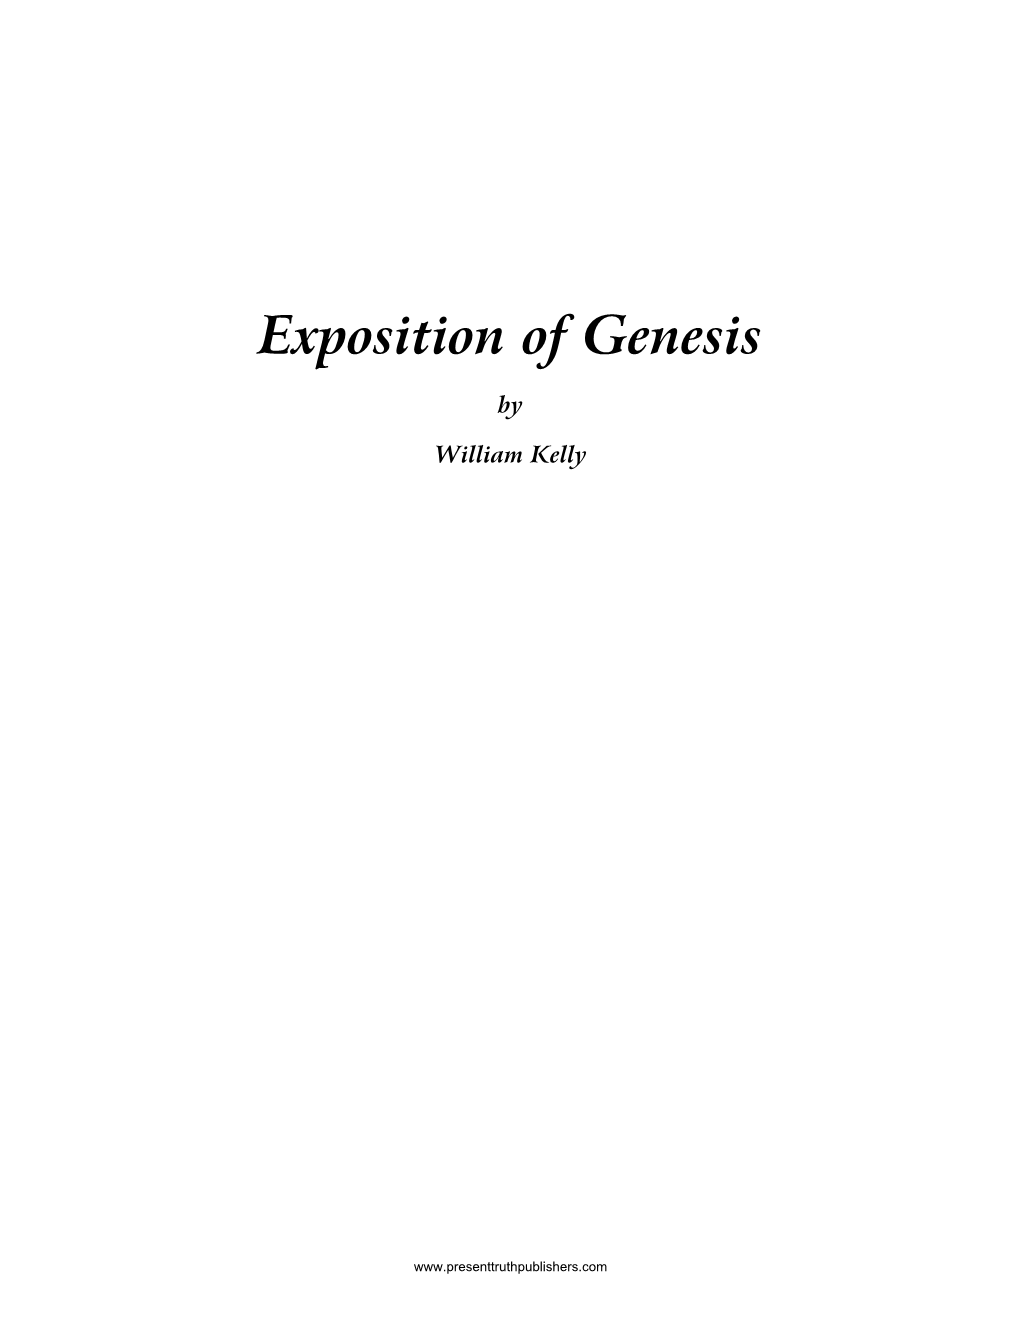 Exposition of Genesis, W. Kelly